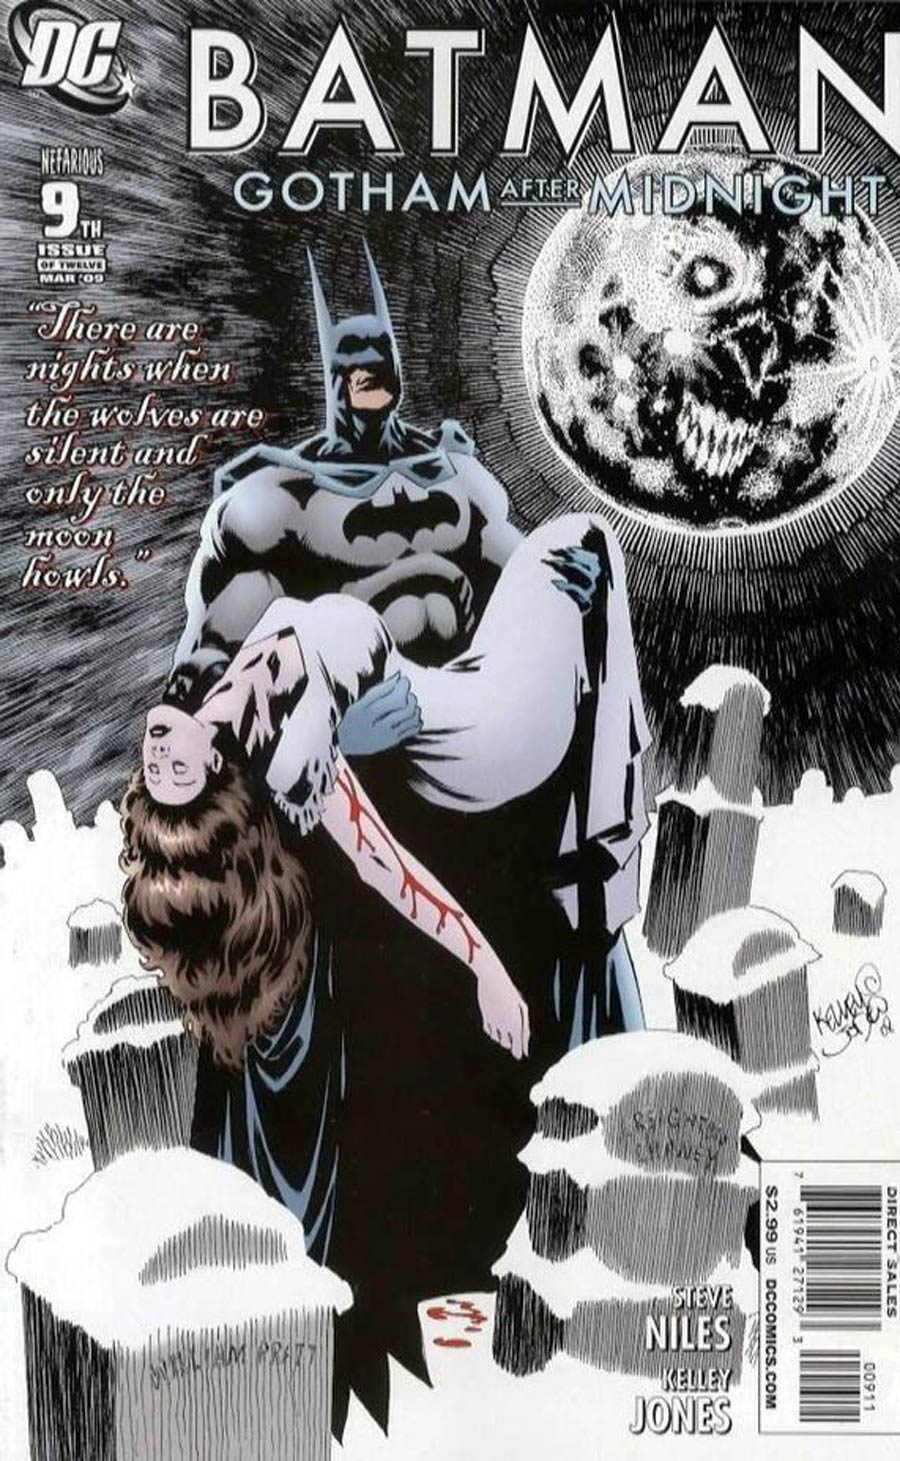 Batman Gotham After Midnight #9